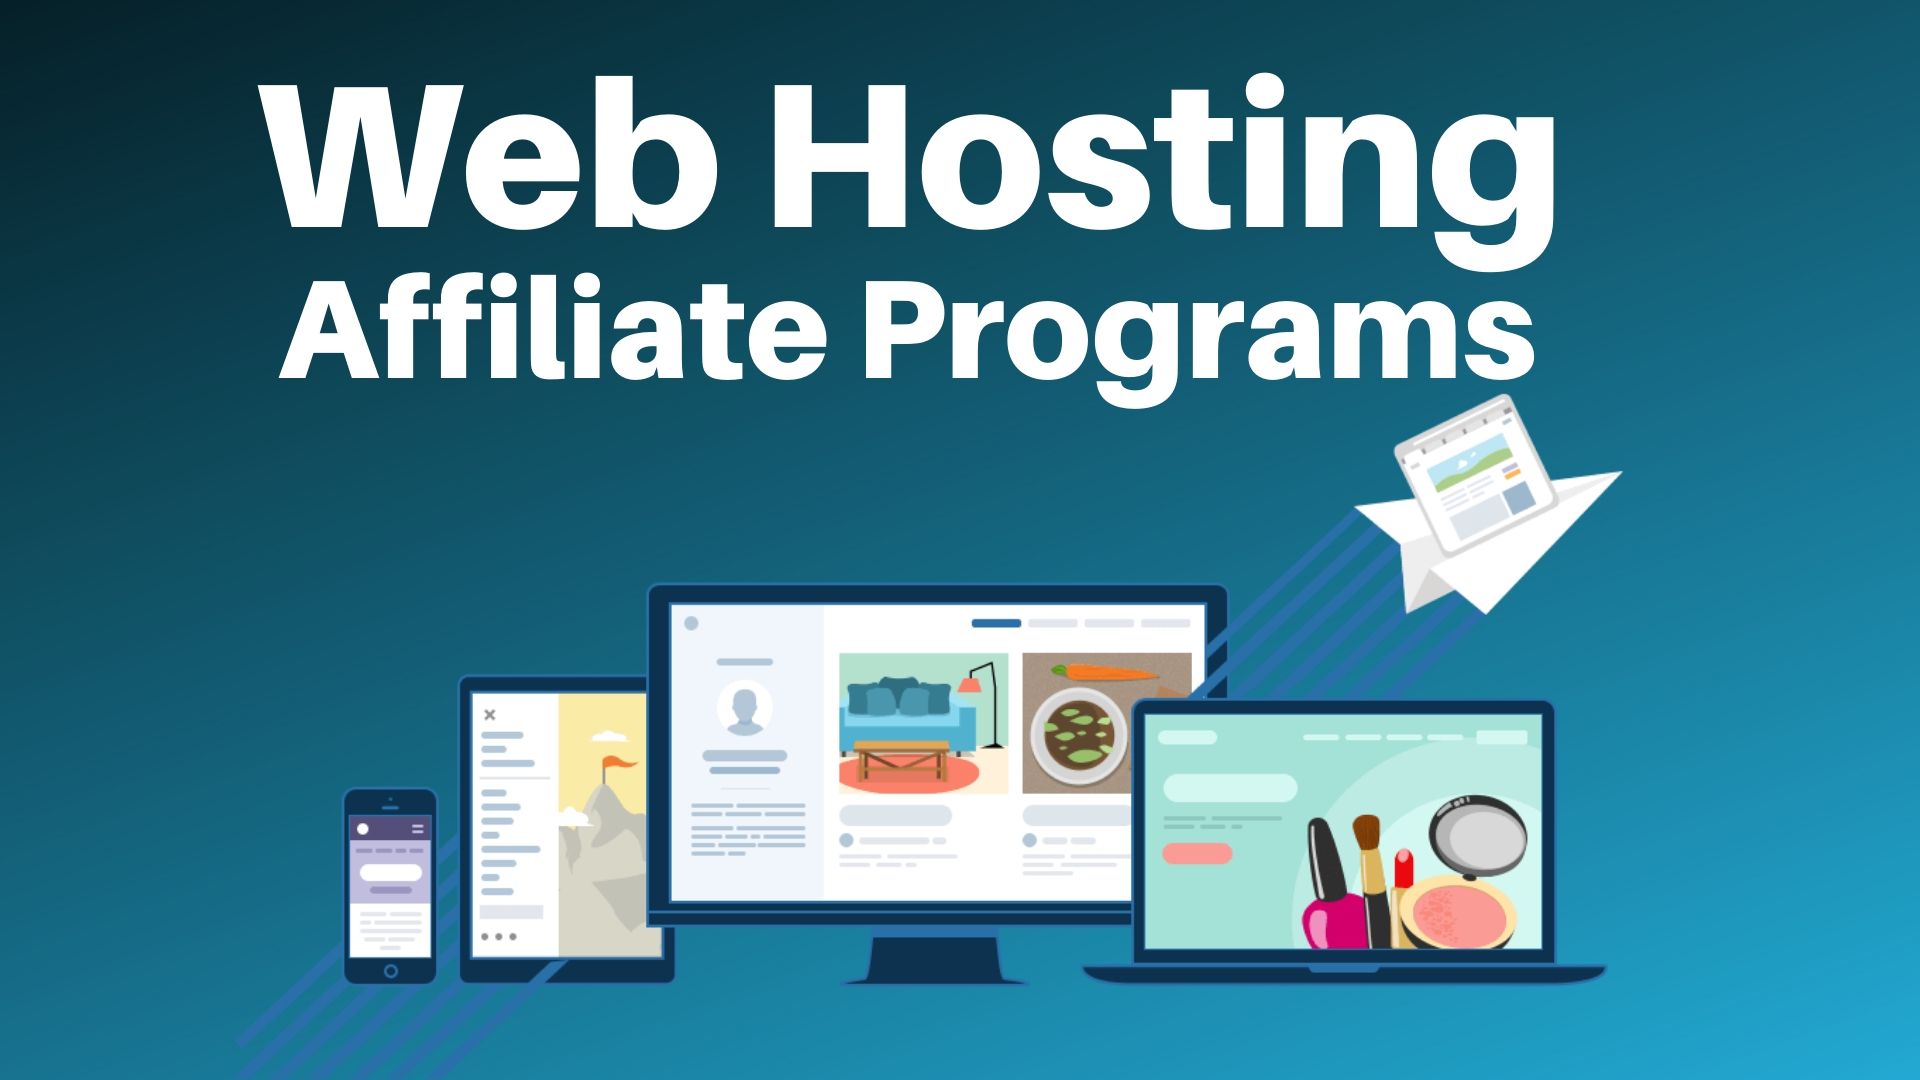 The BEST Web Hosting Affiliate Programs?